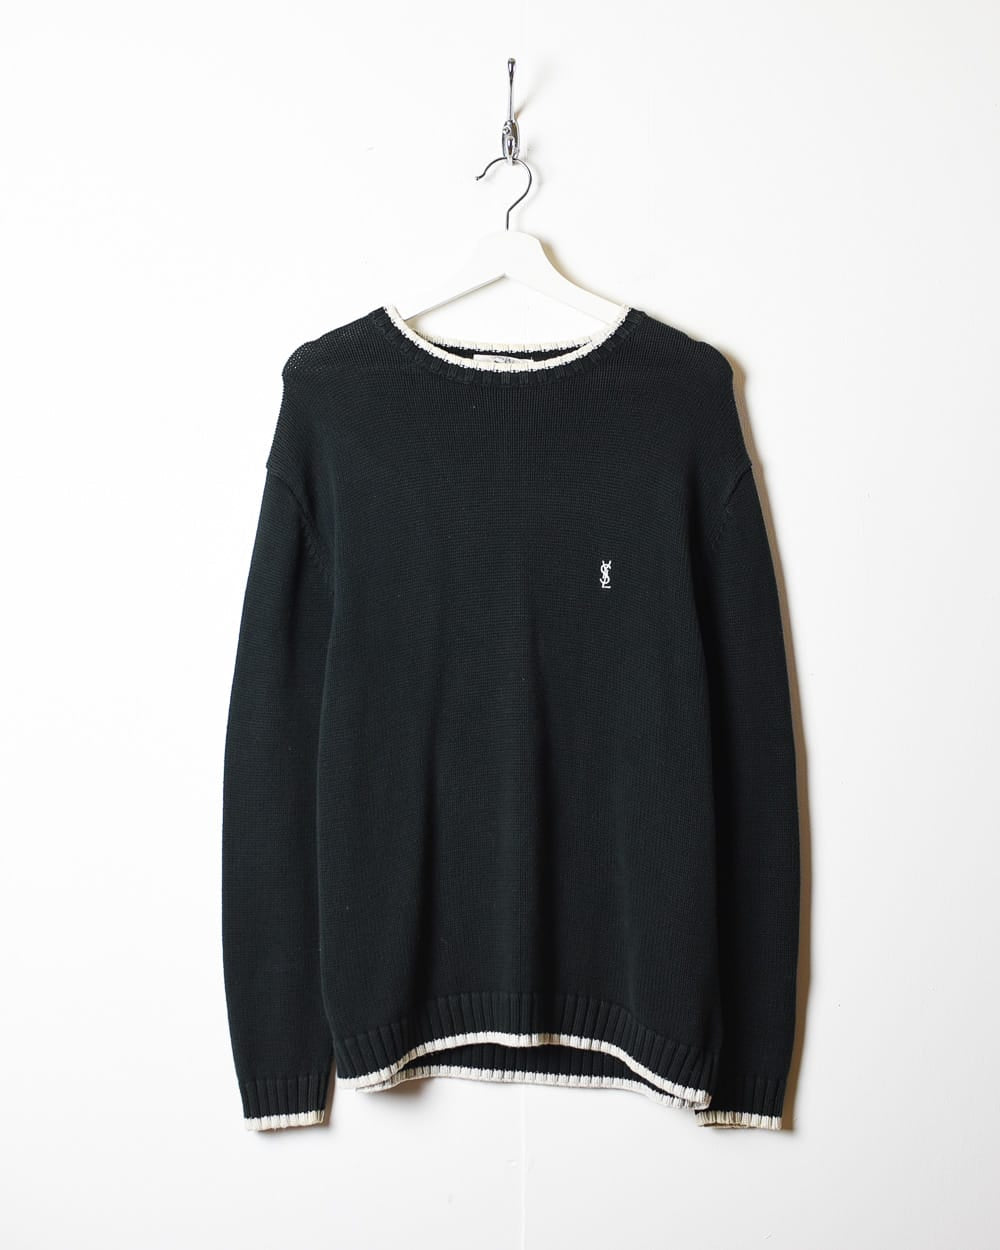 Black Yves Saint Laurent Knitted Sweatshirt - Medium